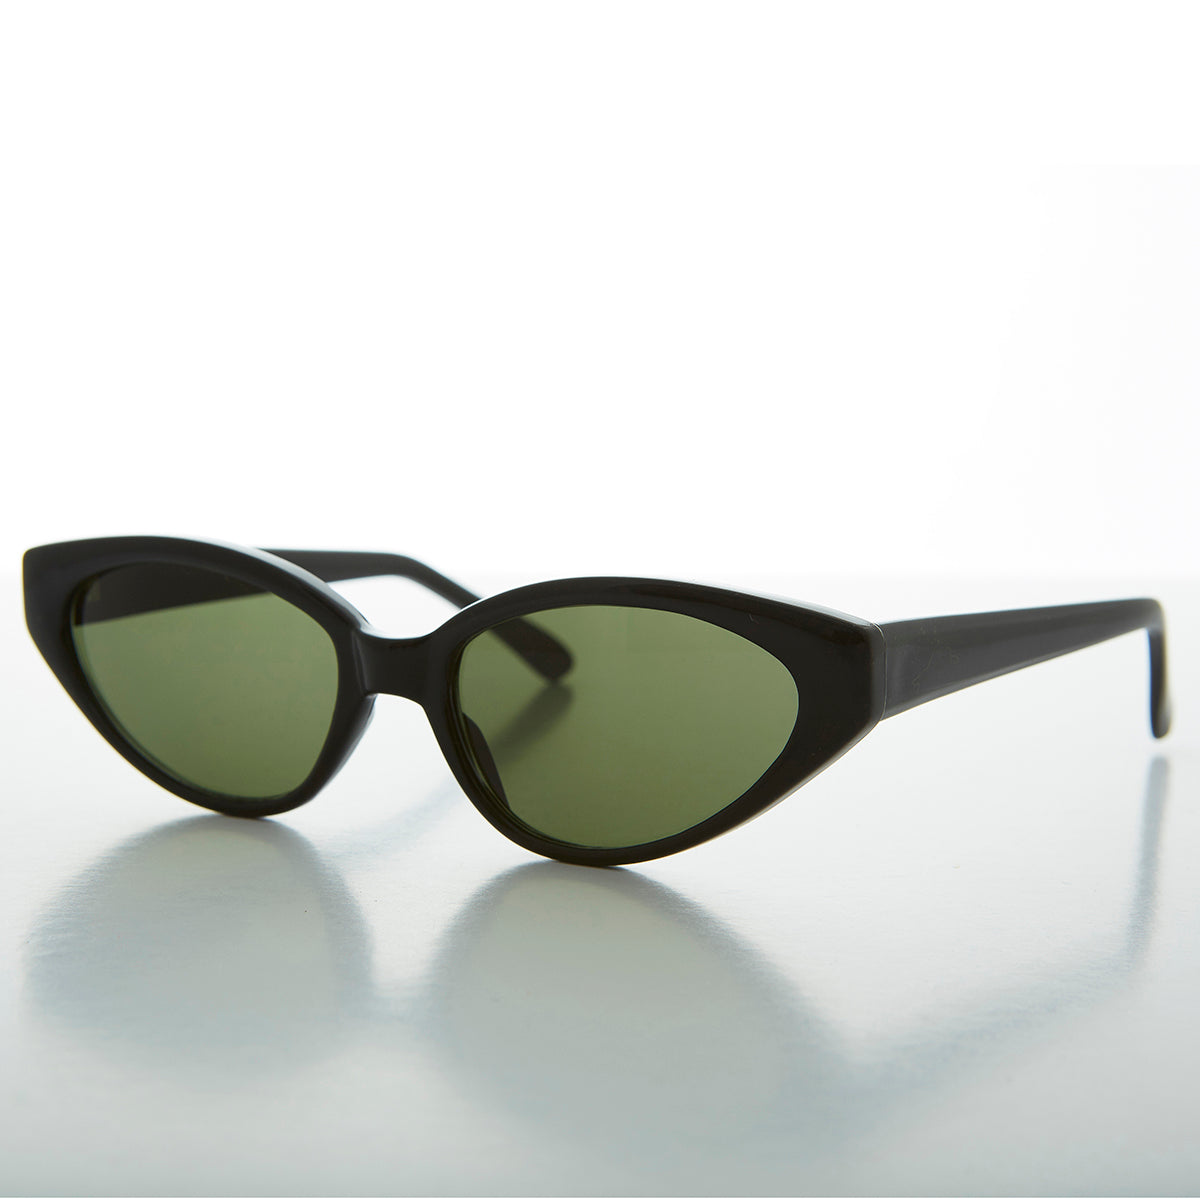 black extreme narrow cat eye sunglasses